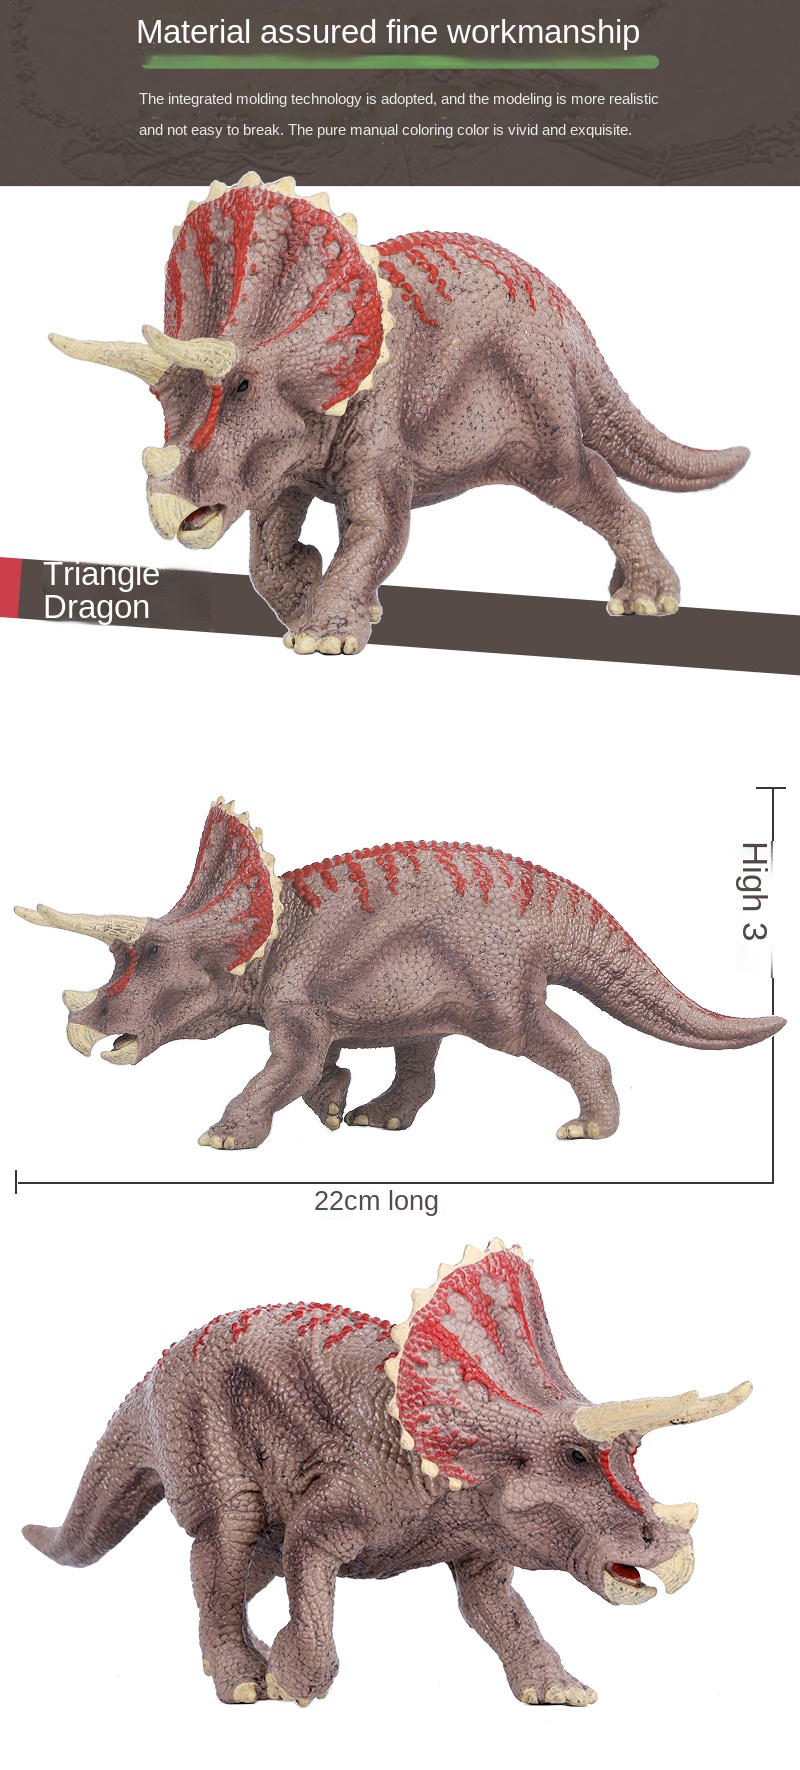 Pentagram Dinosaur Jurassic Realistic Dinosaur Model Toy Figure Kids Birthday 